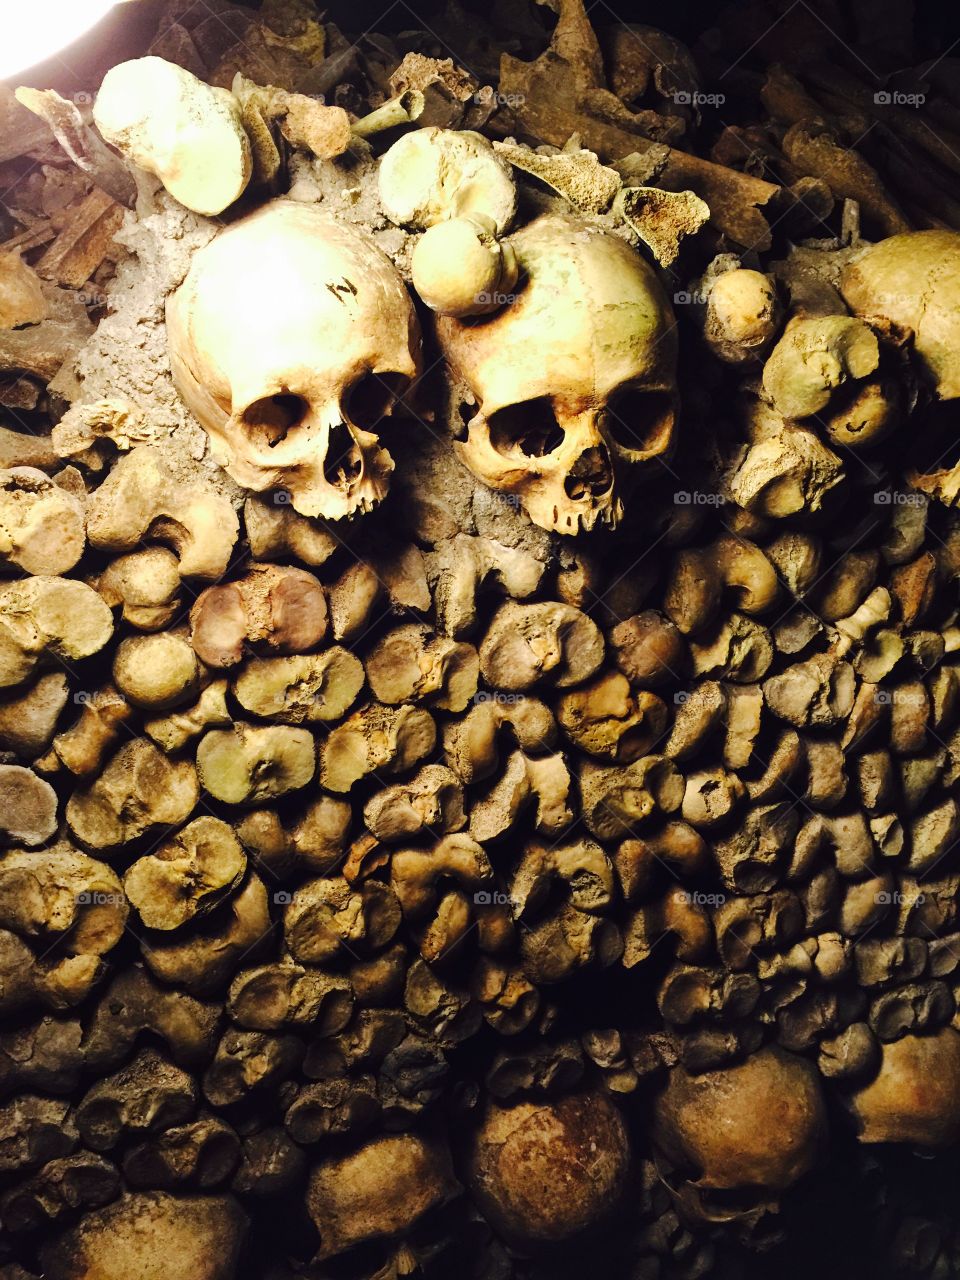 Skulls - Catacombs - Paris 